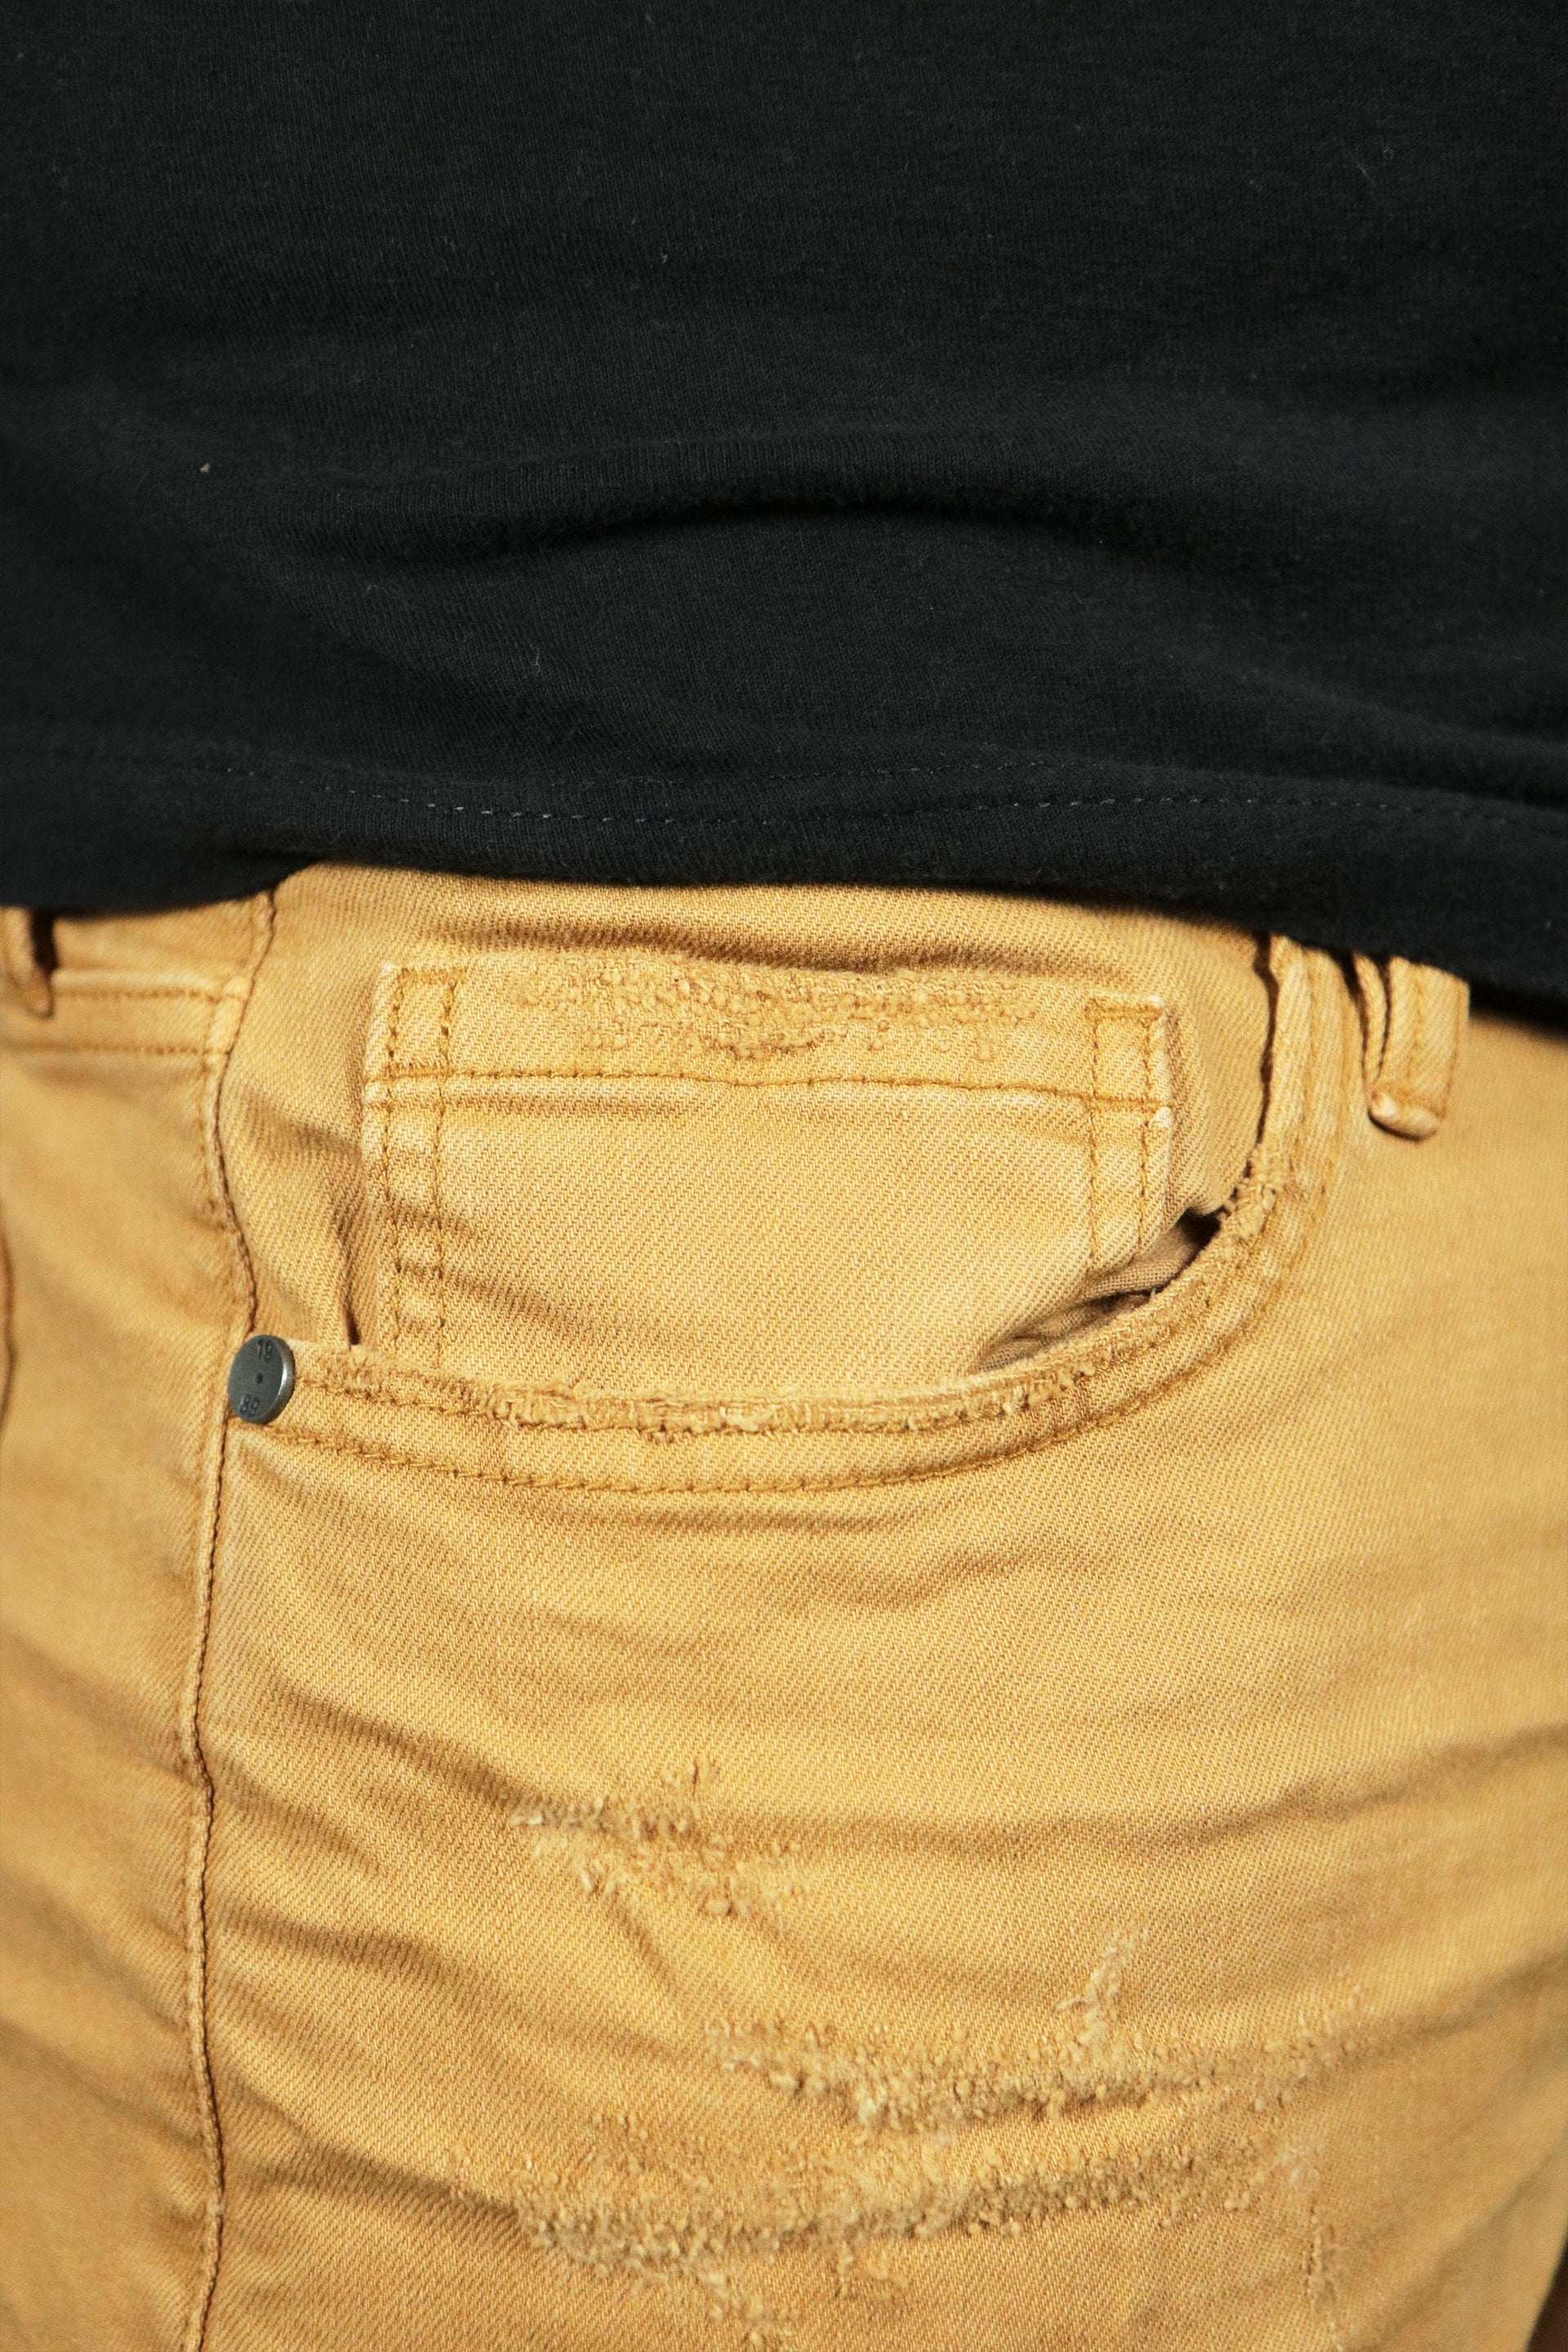 The pocket of the khaki grunge shorts by Jordan Craig.